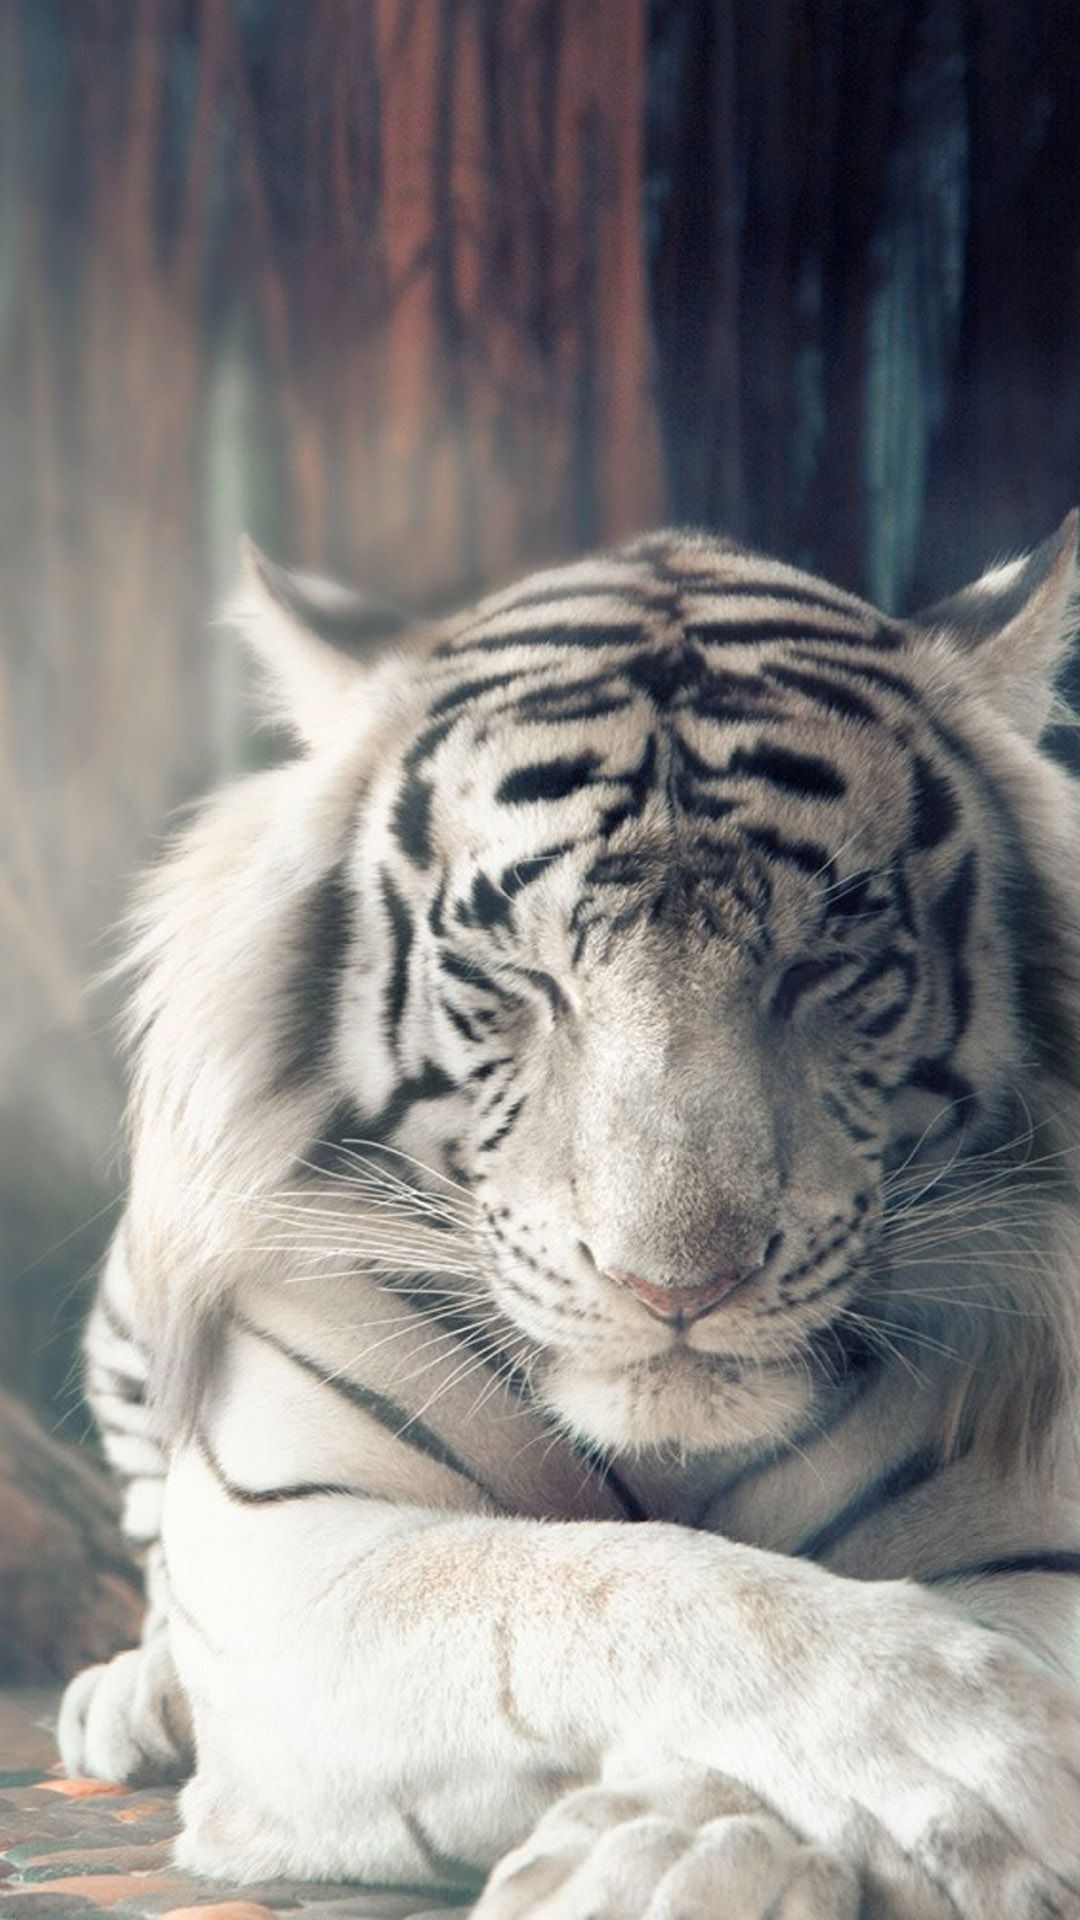 1080x1920 White Tiger Autumn Sunlight 4K Ultra HD Mobile Wallpaper | Tiger spirit animal, Tiger pictures, Tiger wallpaper